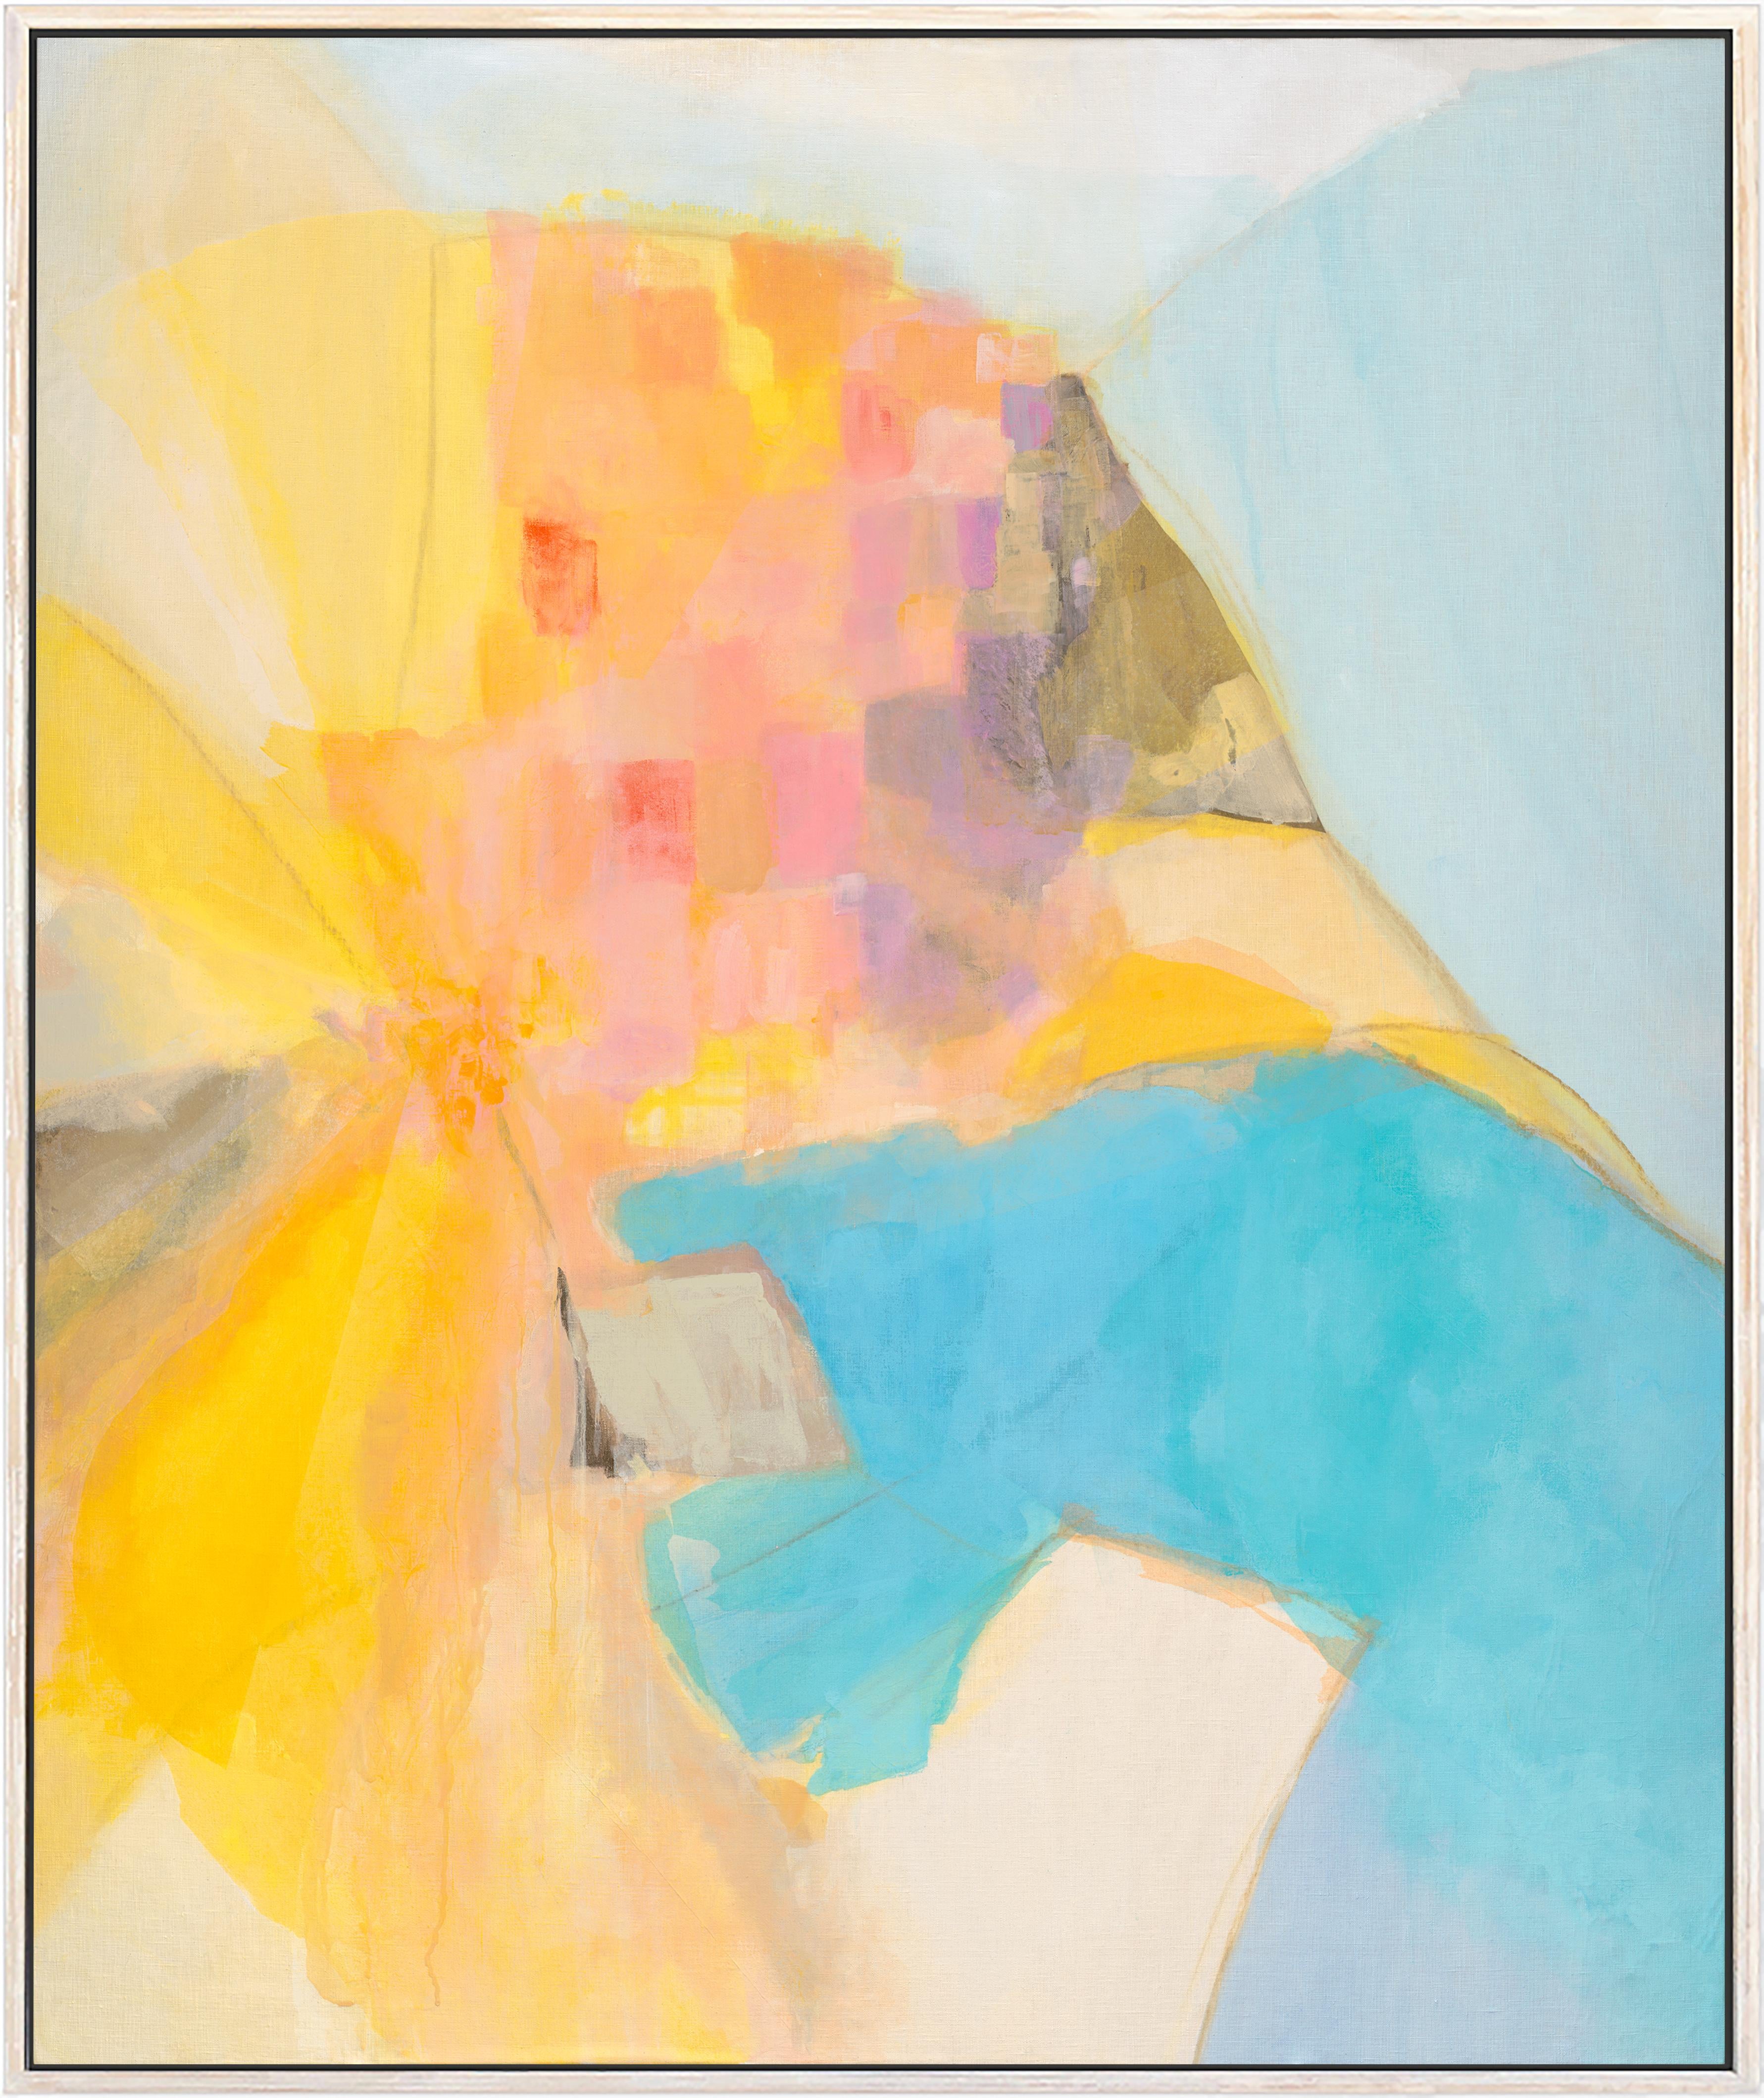 Stacey Warnix Abstract Painting - Manarola, Original Framed Contemporary Colorful Abstract Mixed Media Painting